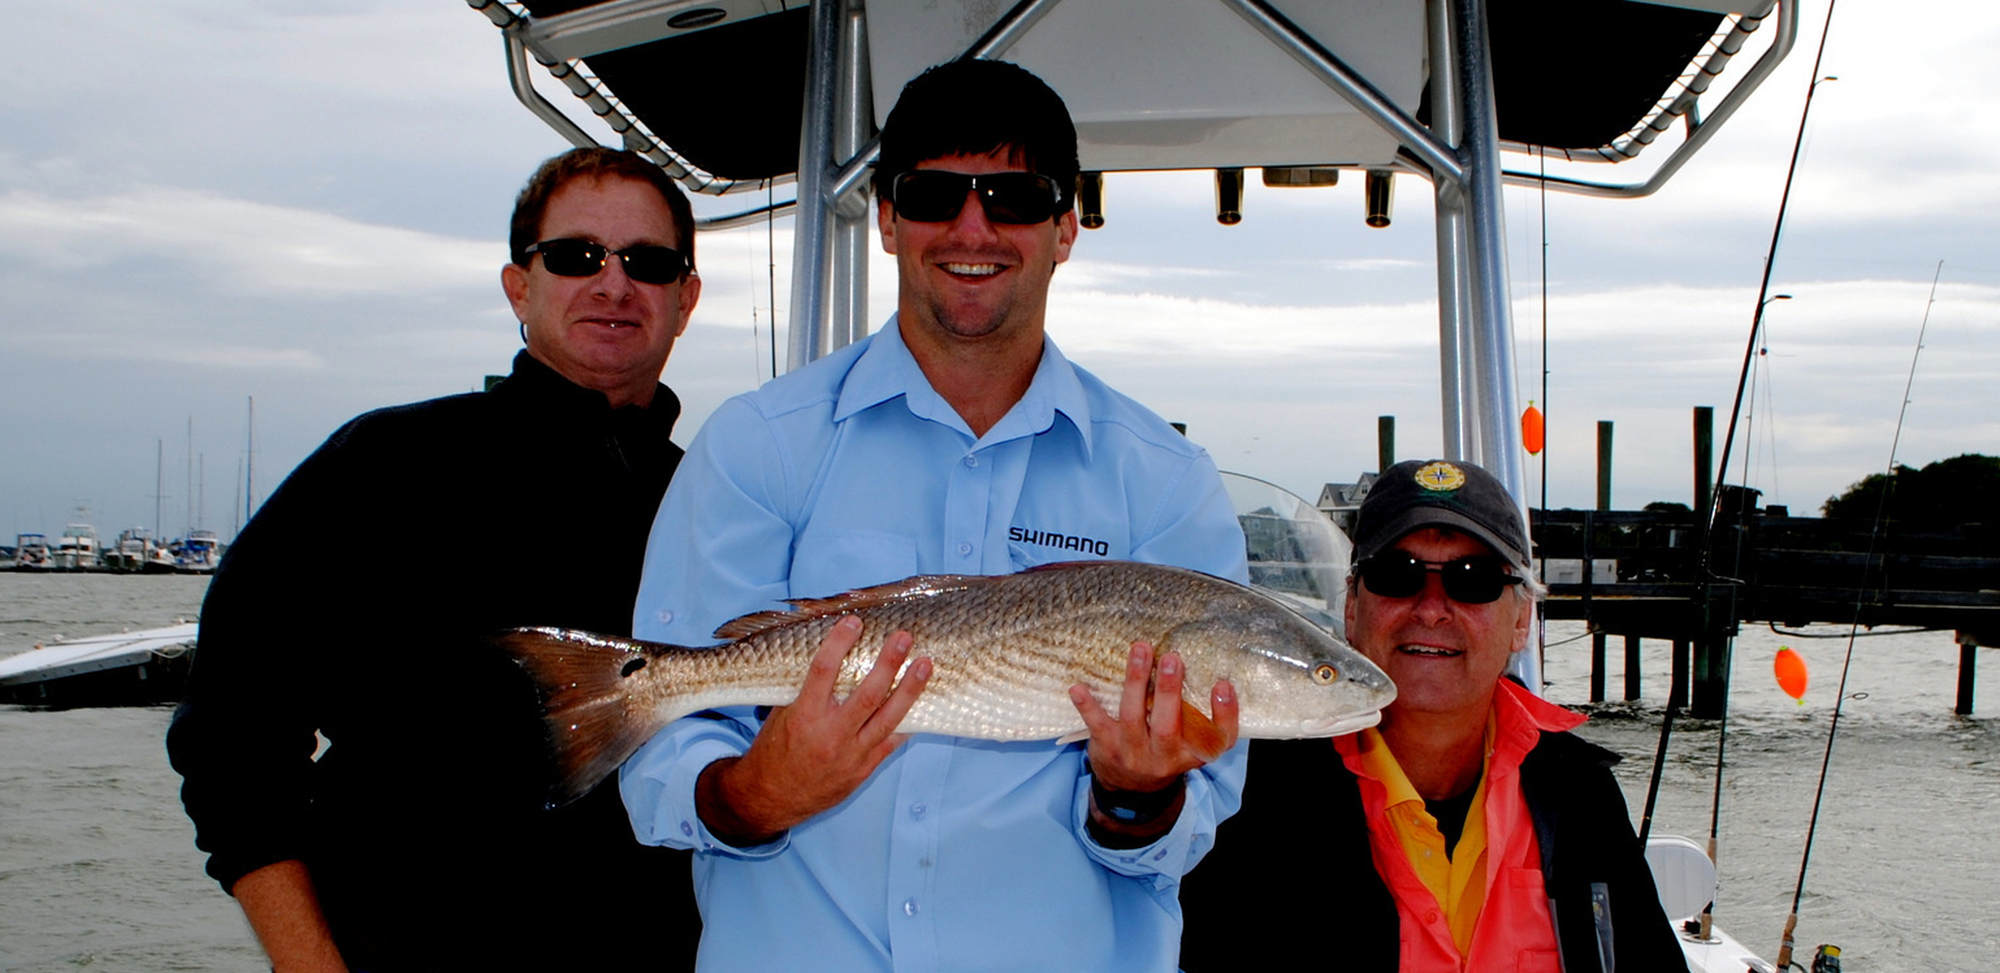 Inshore fishing charter trip off coast of Charleston.